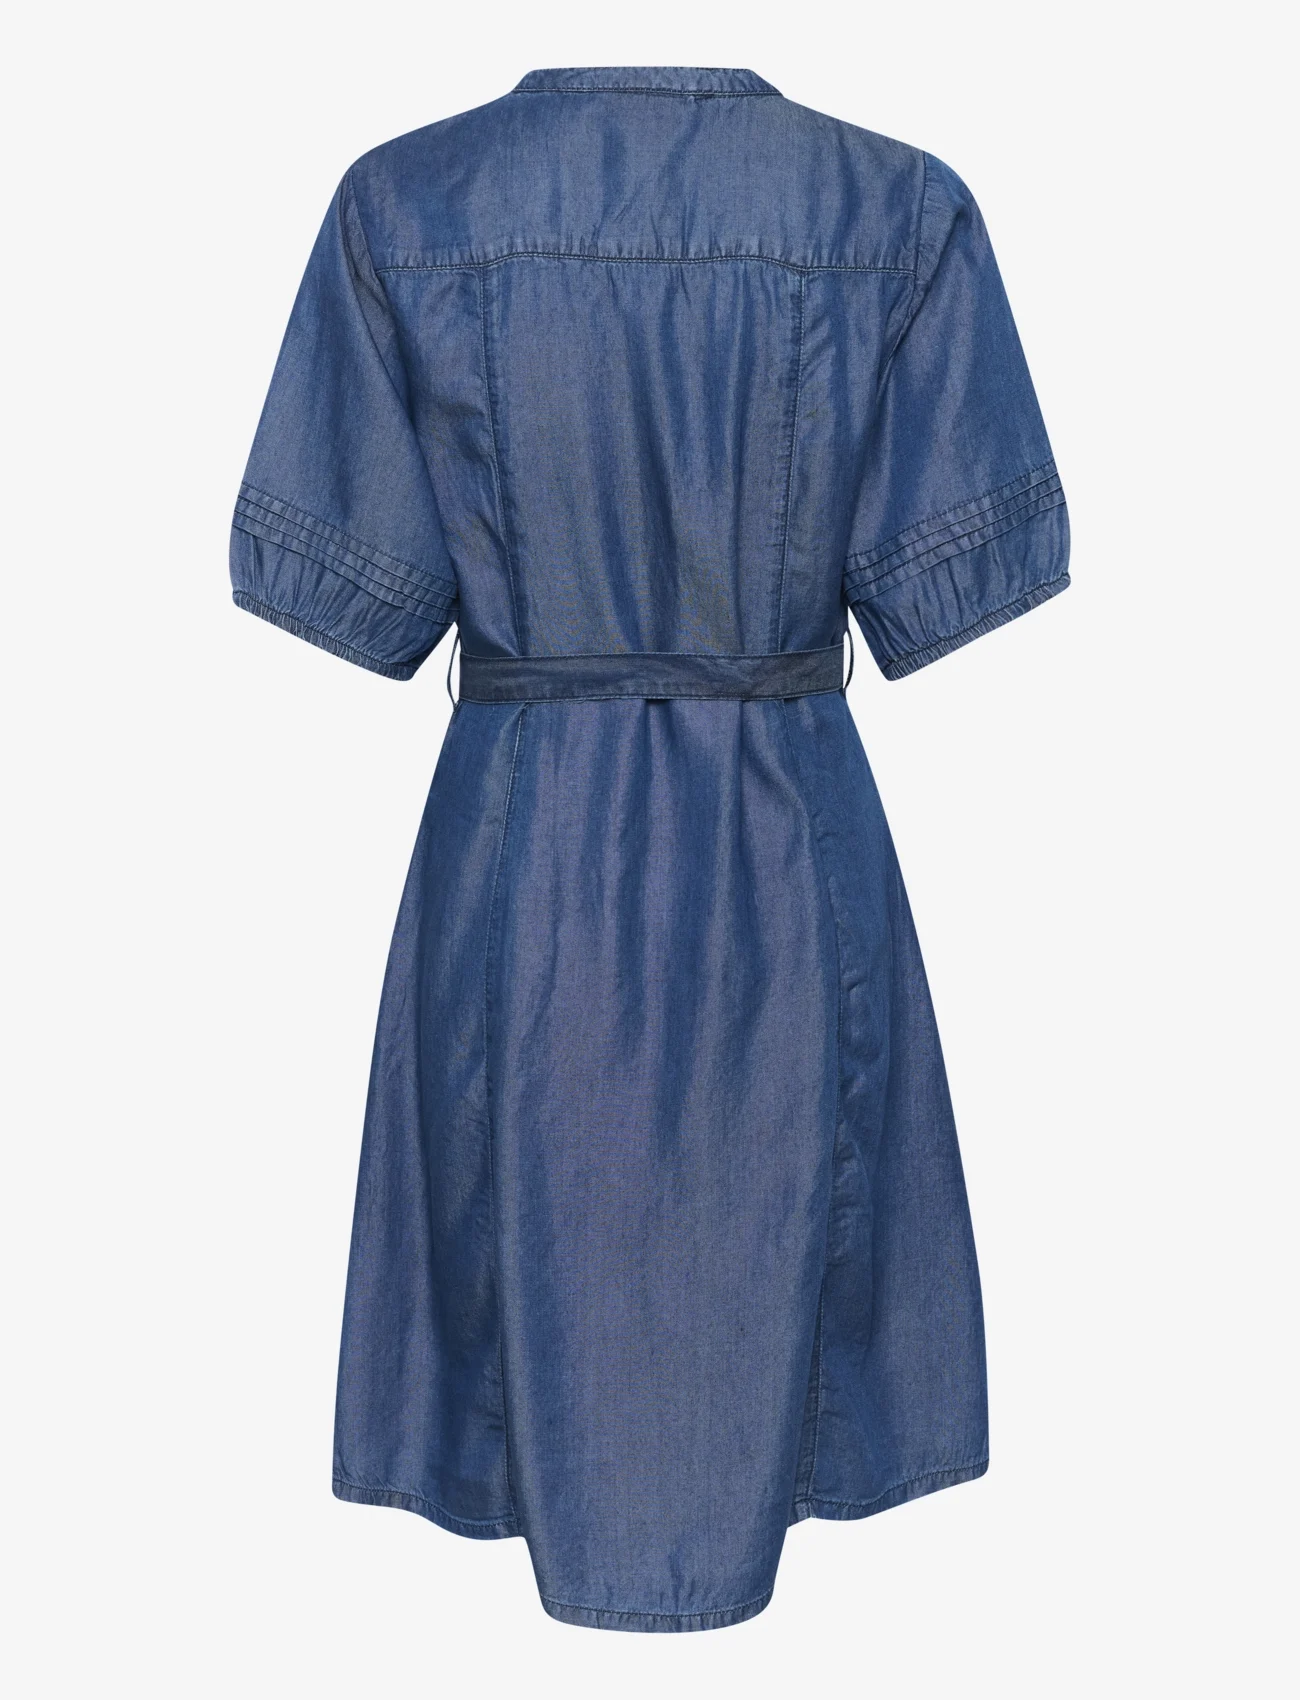 Cream - CRMolly Dress - Zally Fit - denimkjoler - light blue denim - 1